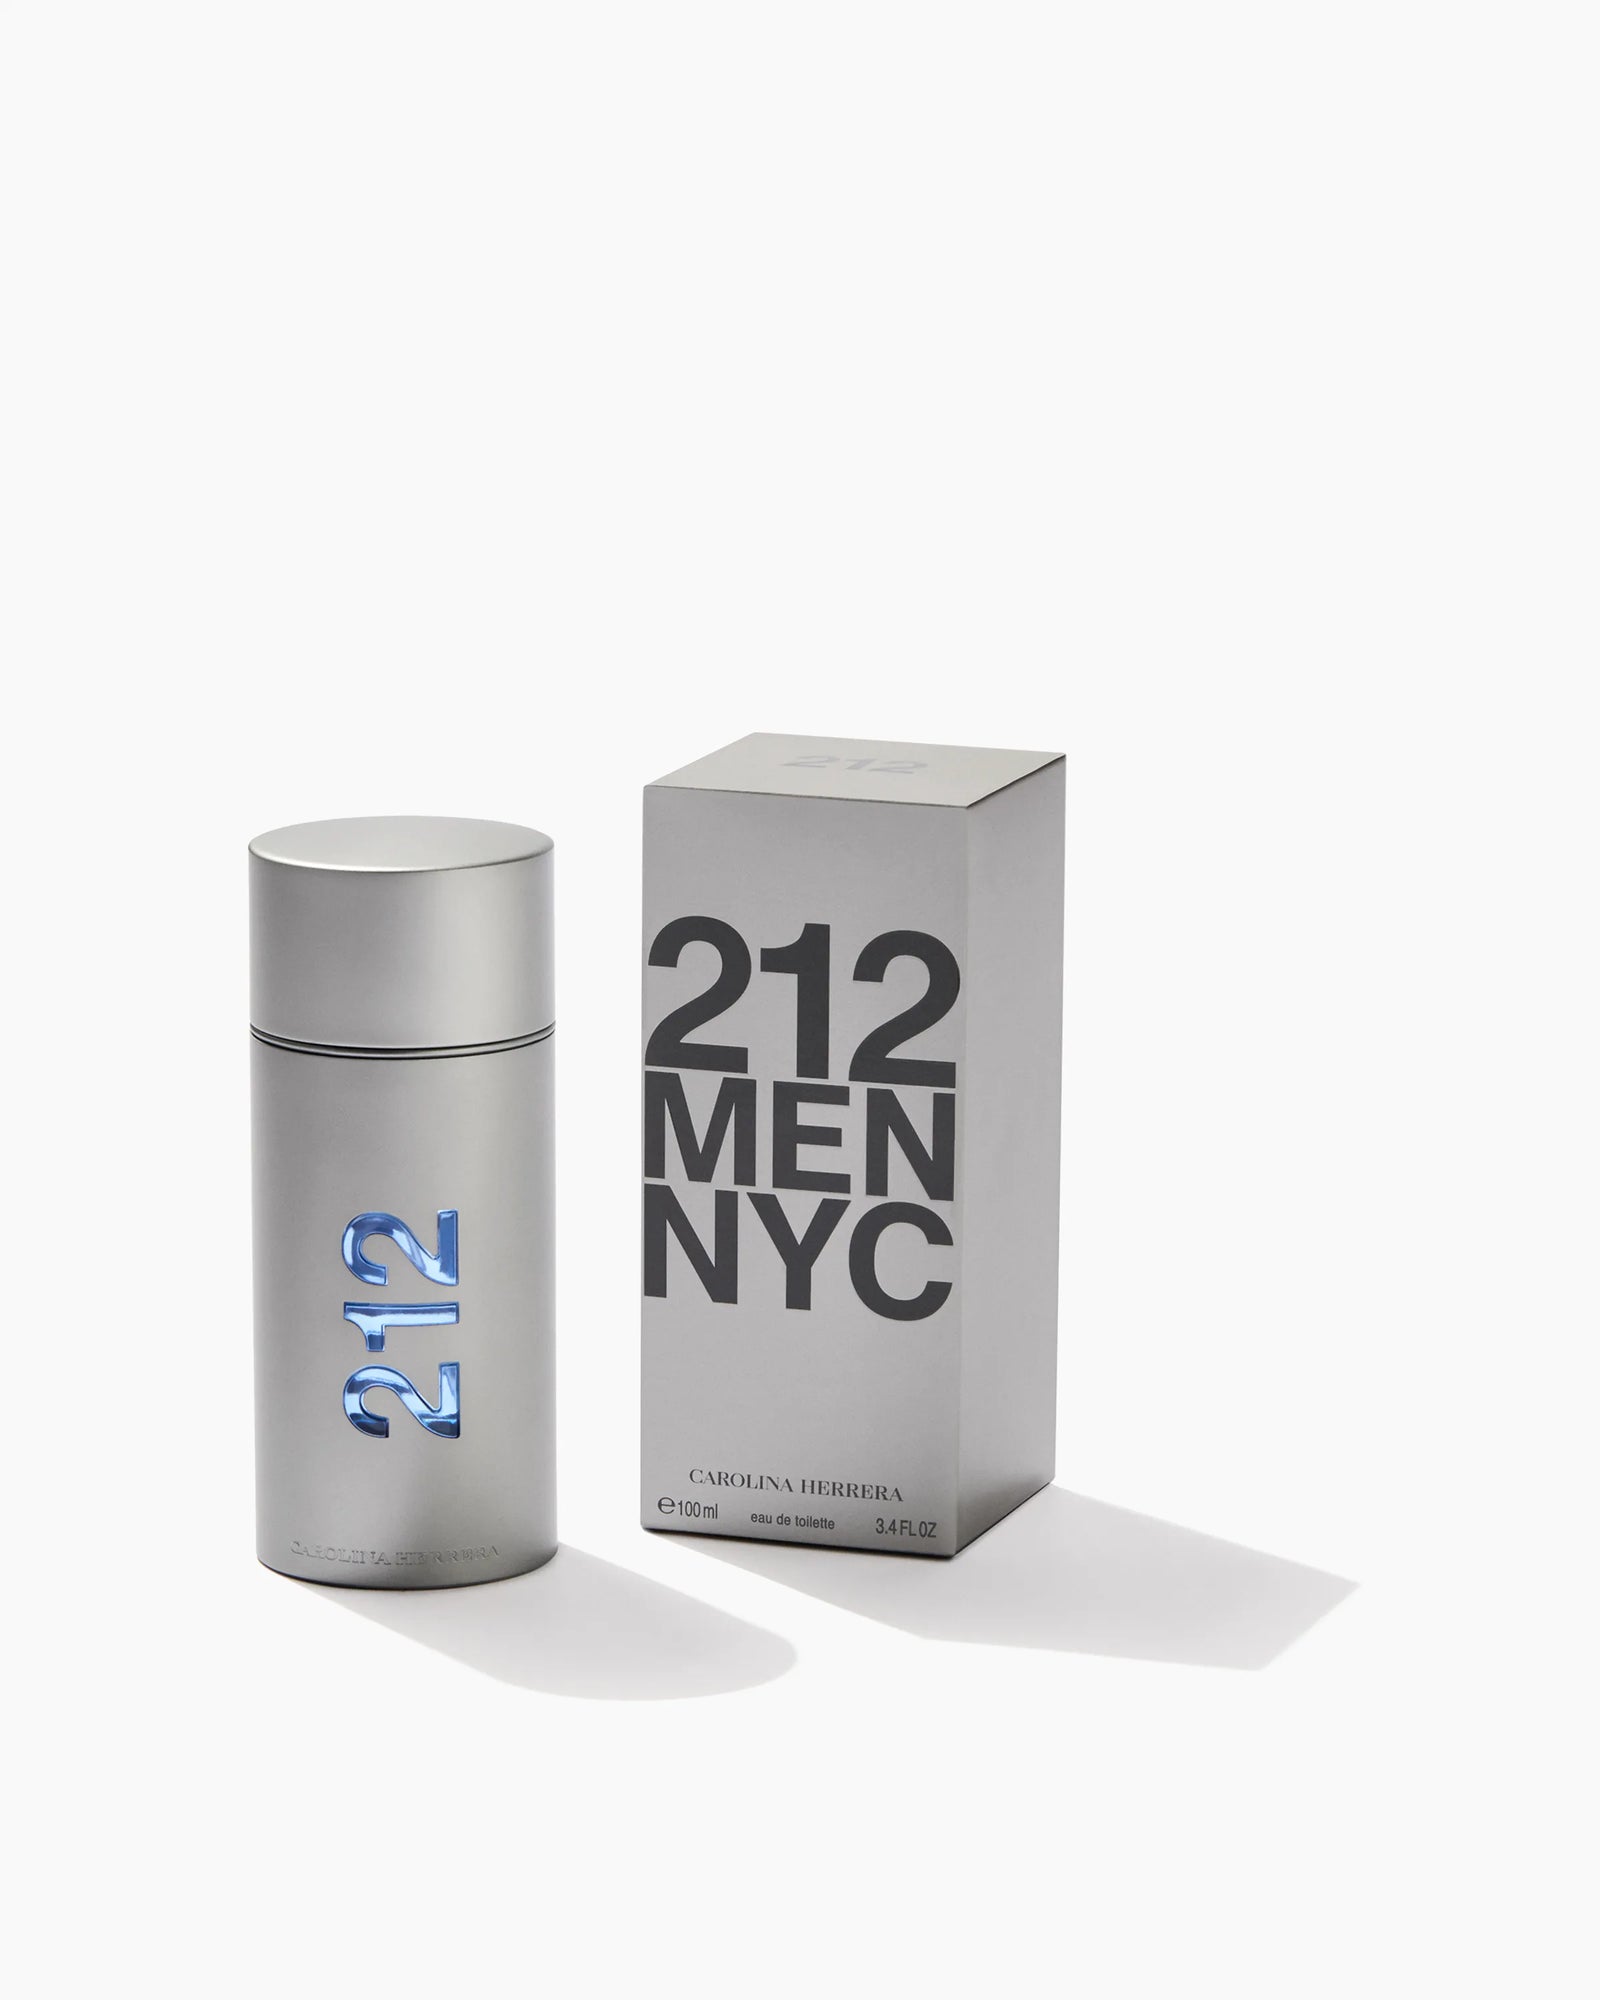 212 NYC by Carolina Herrera Men 3.4oz Eau de Toilette